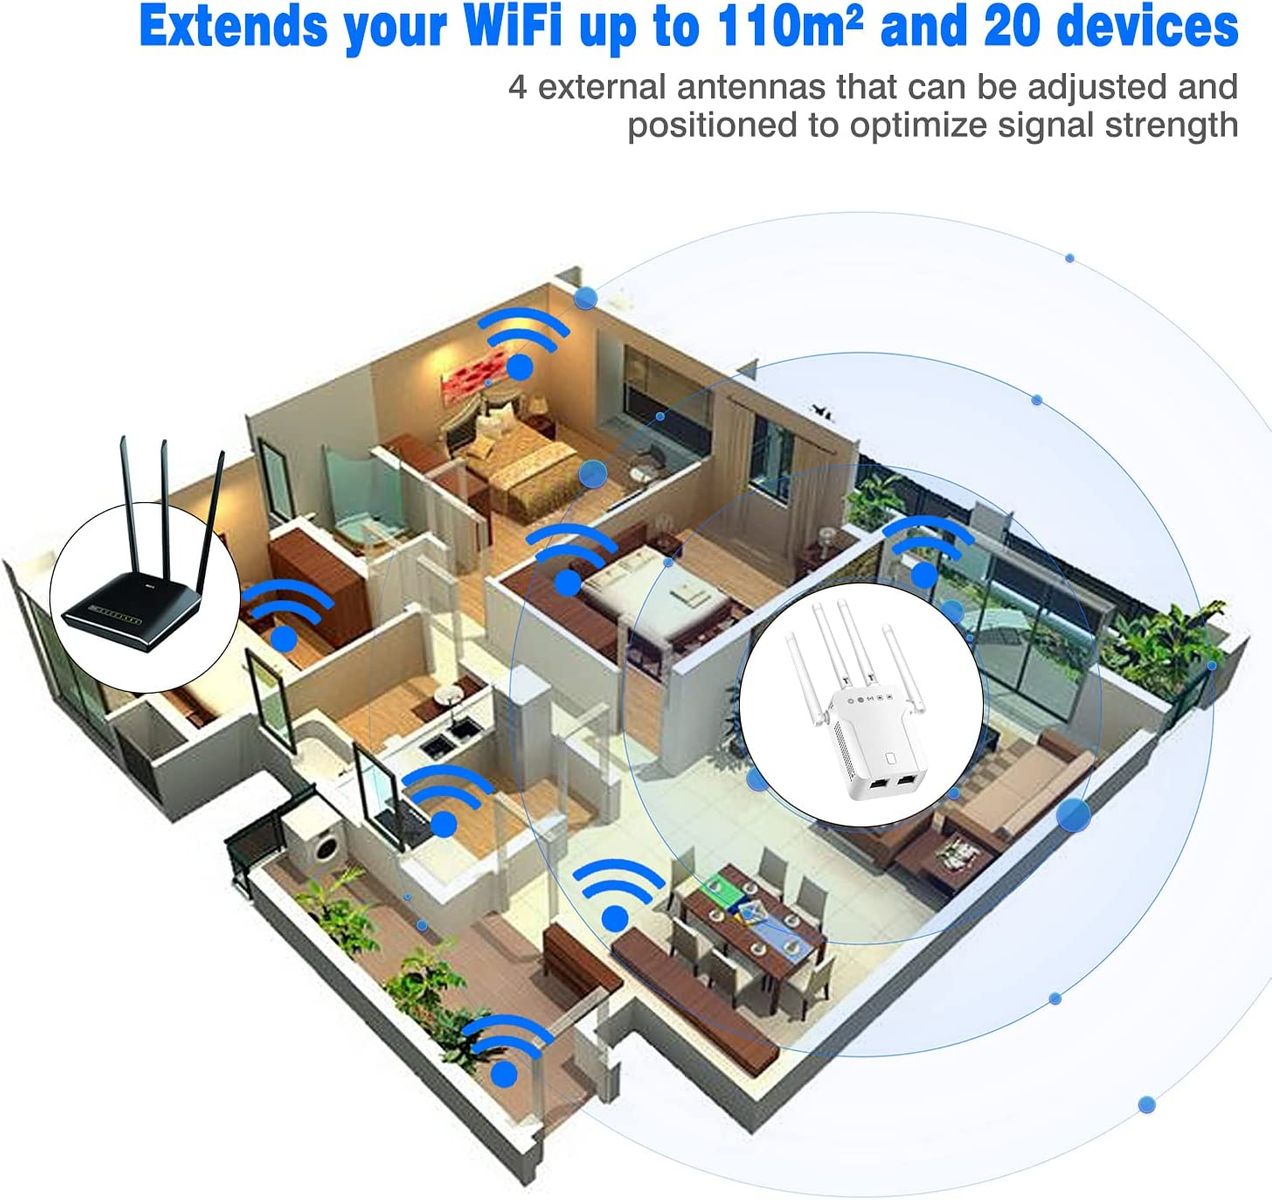 CINEMON 1200 Mbit/s WLAN Repeater LAN Anschluss Wi-Fi Dualband bis zu 200 m²